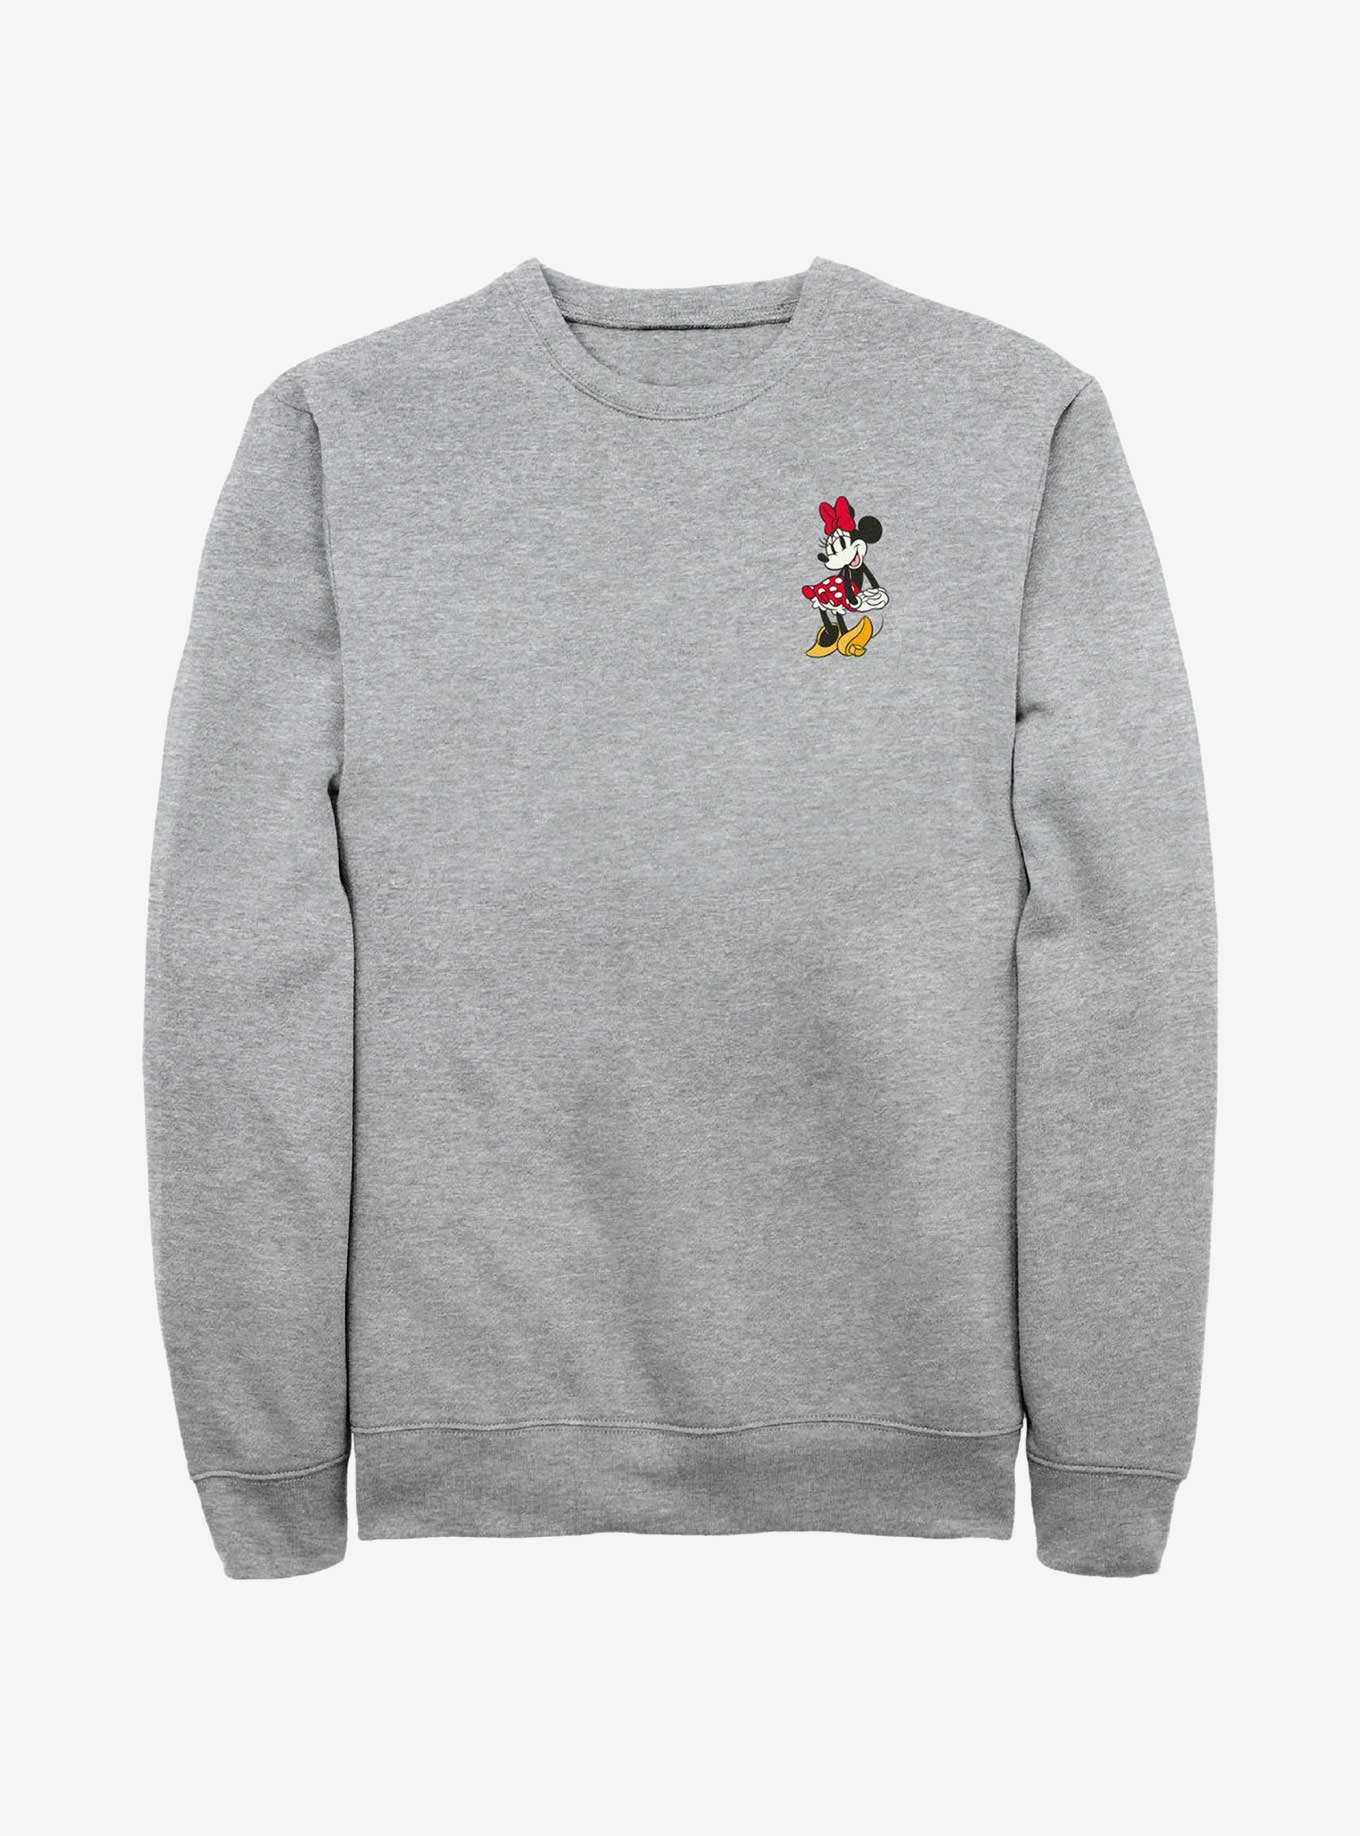 Disney Minnie Mouse Charming Minnie Pocket Sweatshirt, , hi-res